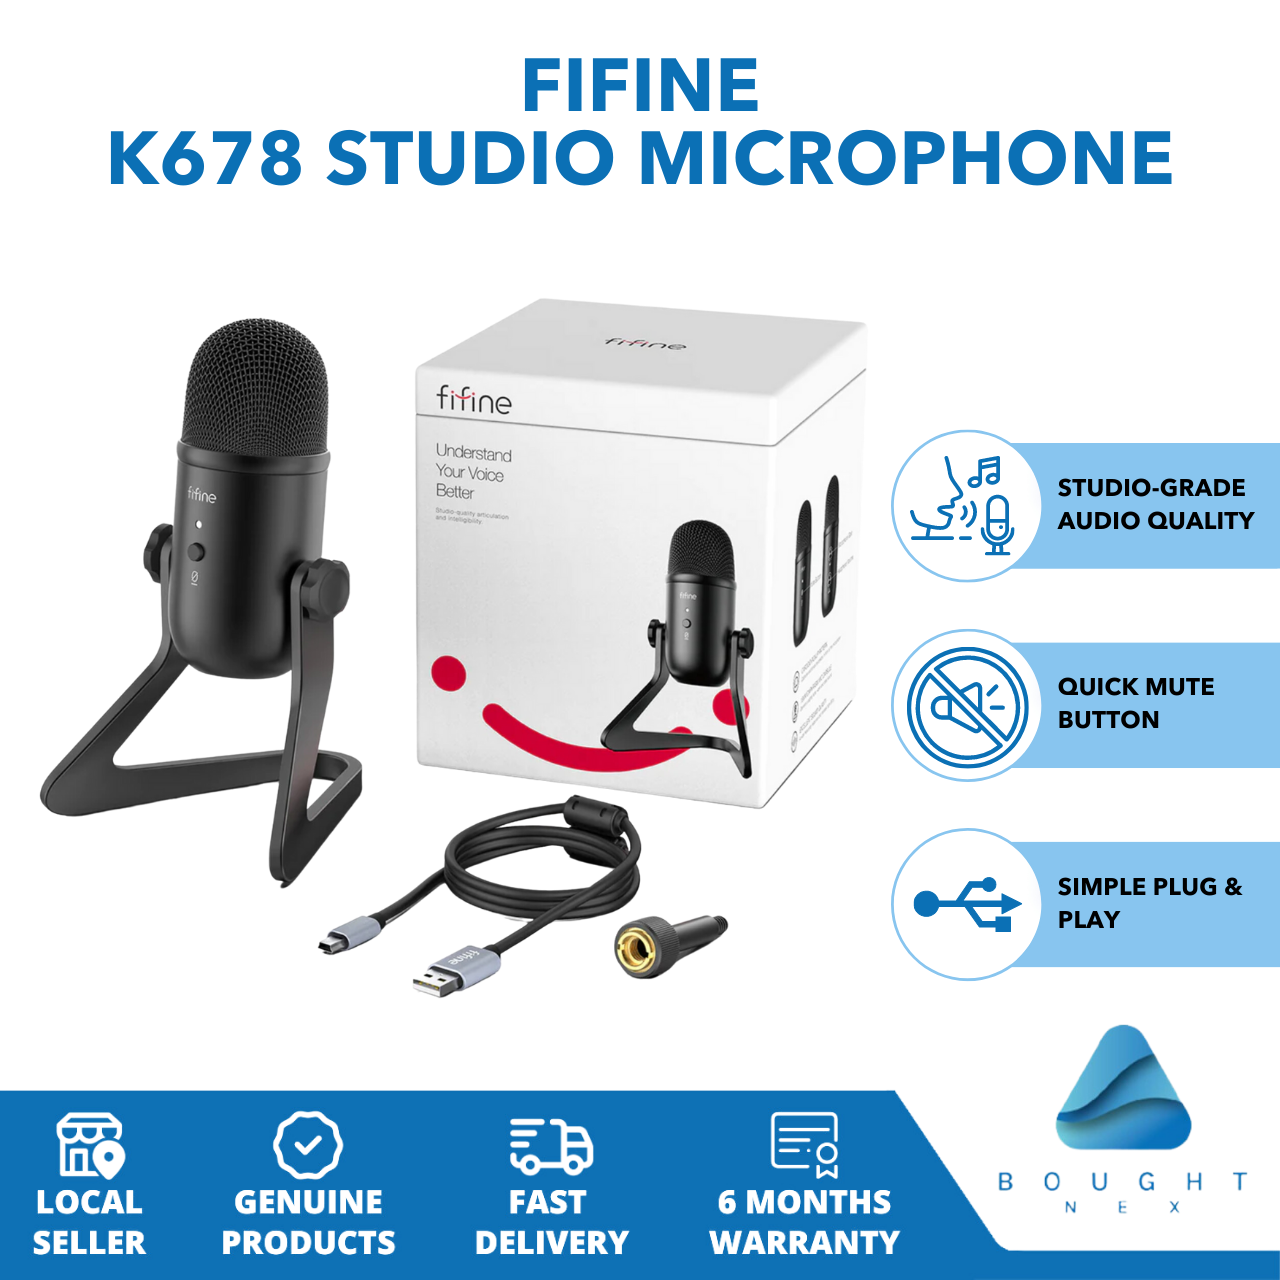 Fifine USB Microphone sale: 27% off